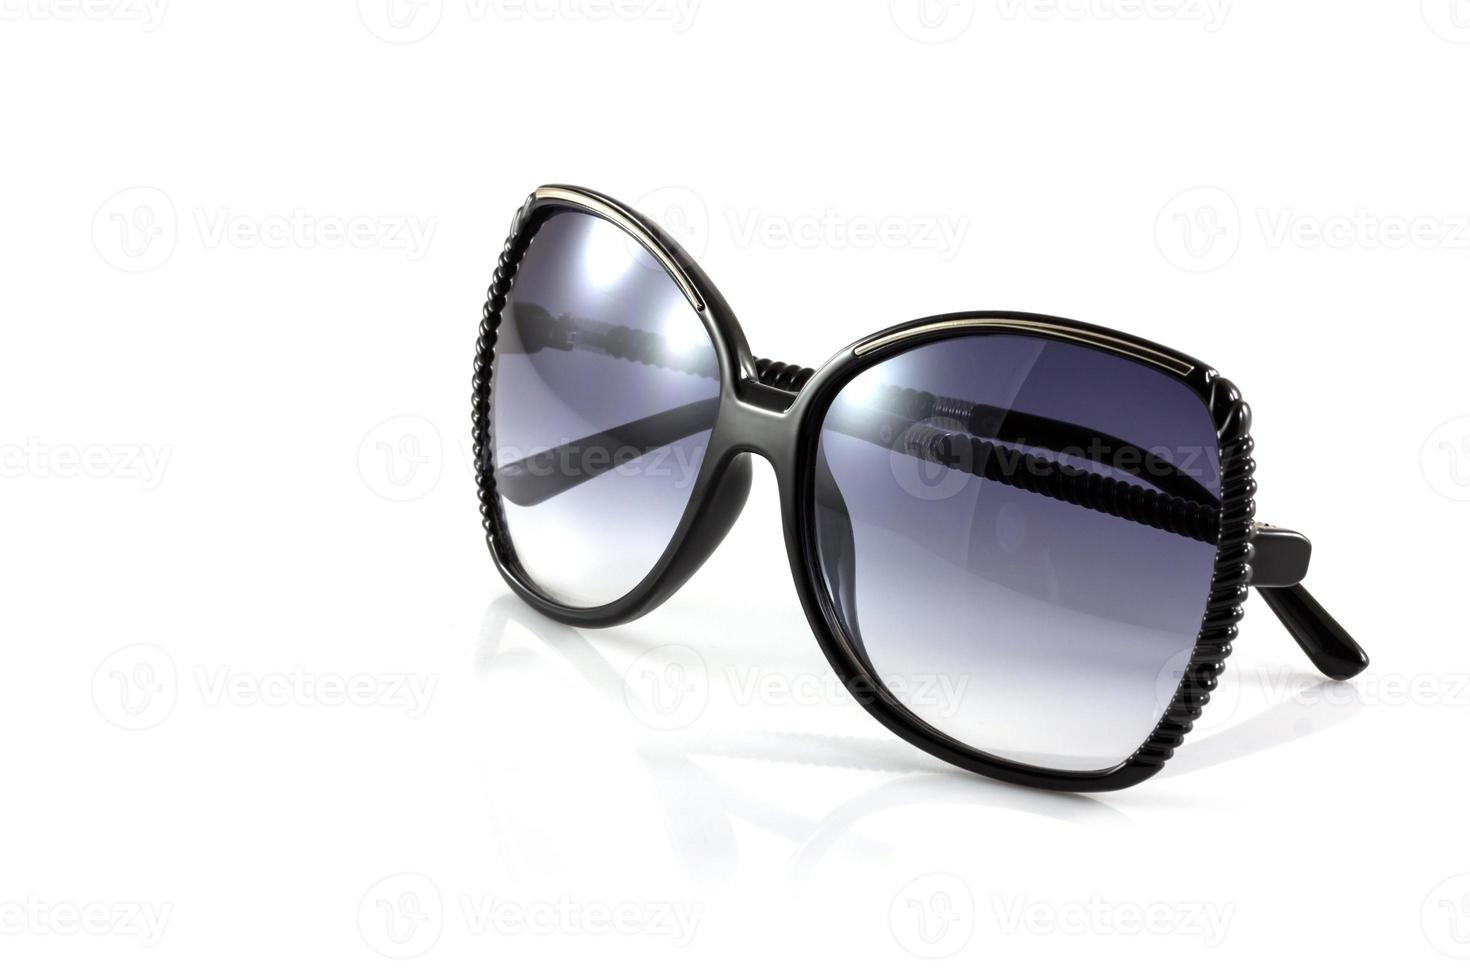 svart mode solglasögon isolera på vit bakgrund foto